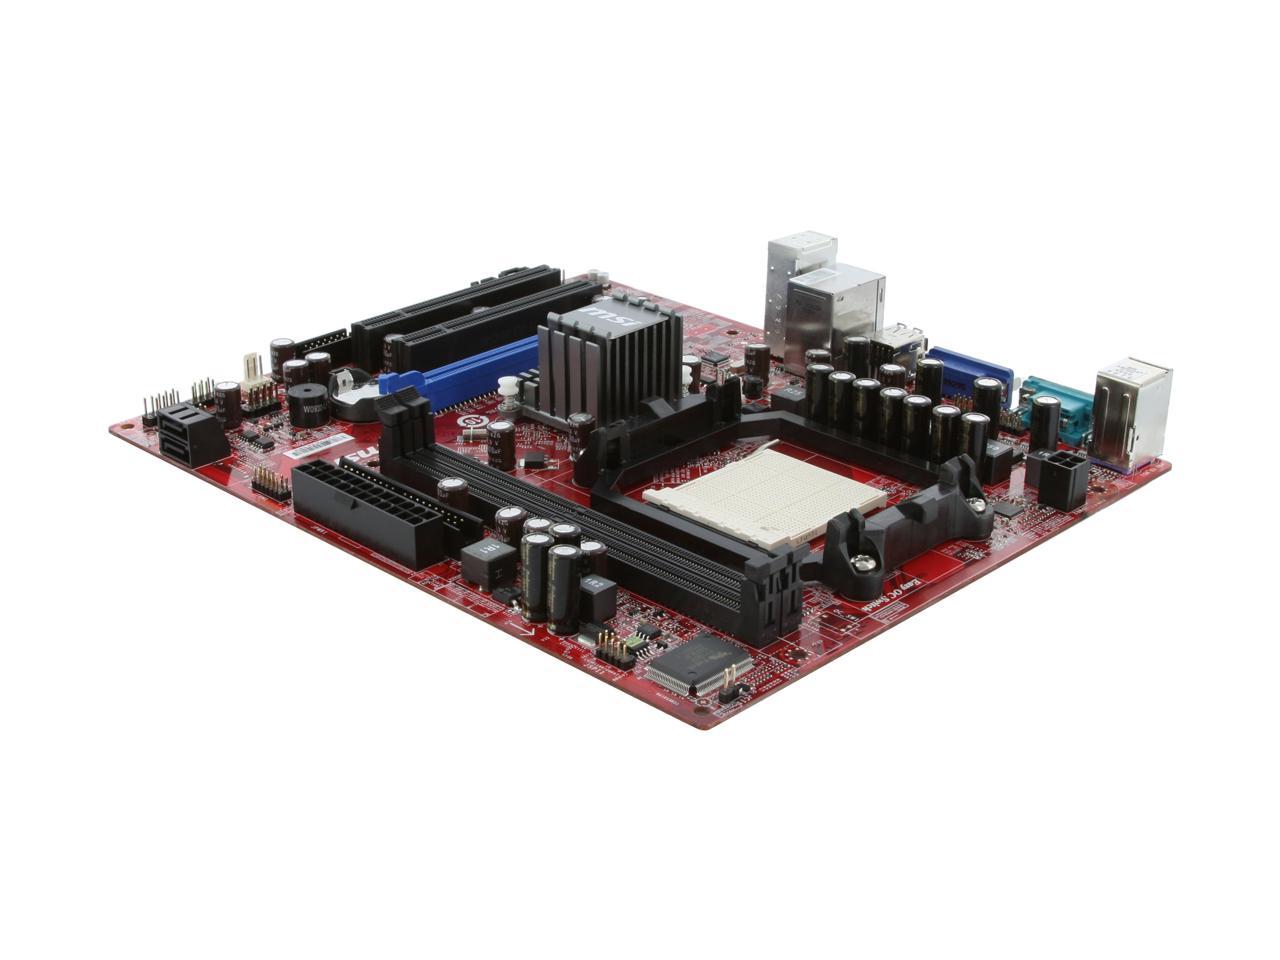 MSI K9N6PGM2-V2 AM3/AM2+/AM2 NVIDIA GeForce 6150SE Micro ATX AMD Motherboard